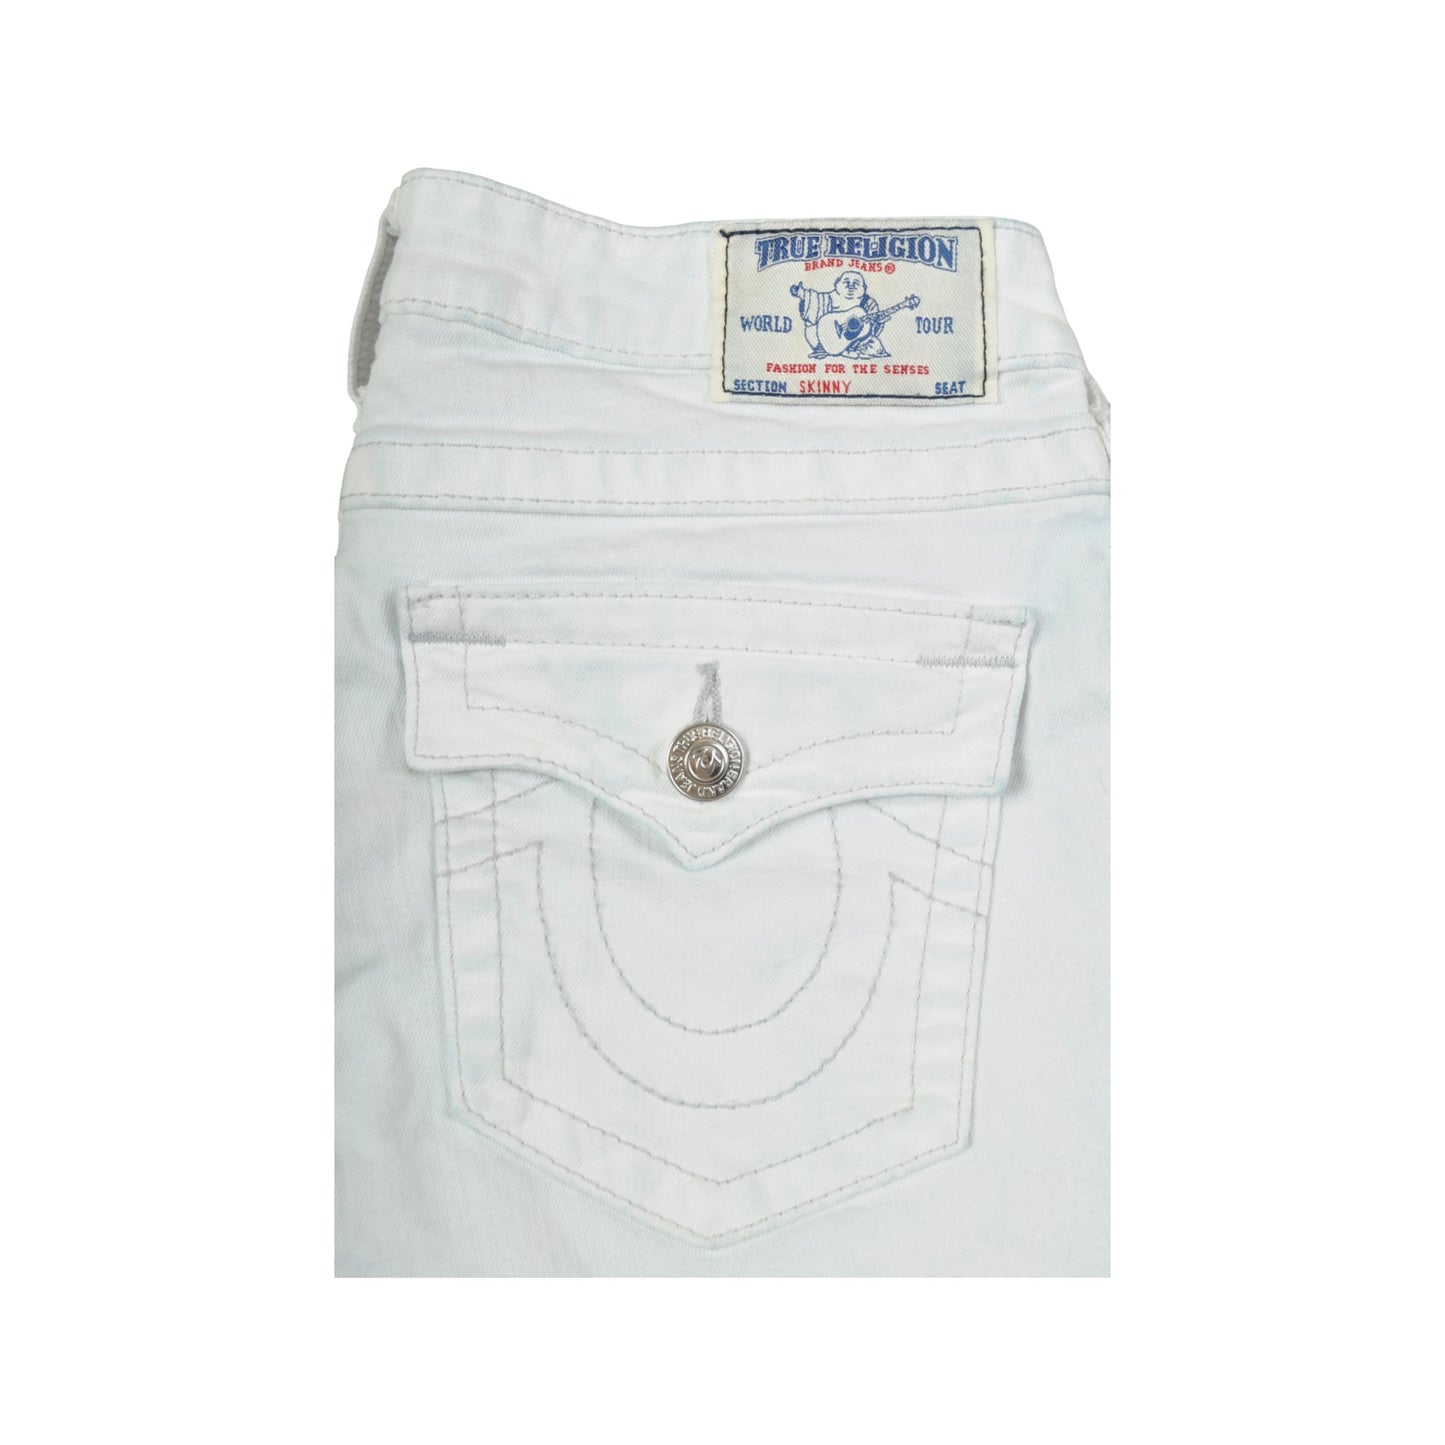 Vintage Y2K True Religion Skinny Fit Jeans White Blue Wash Denim Ladies W29 L31